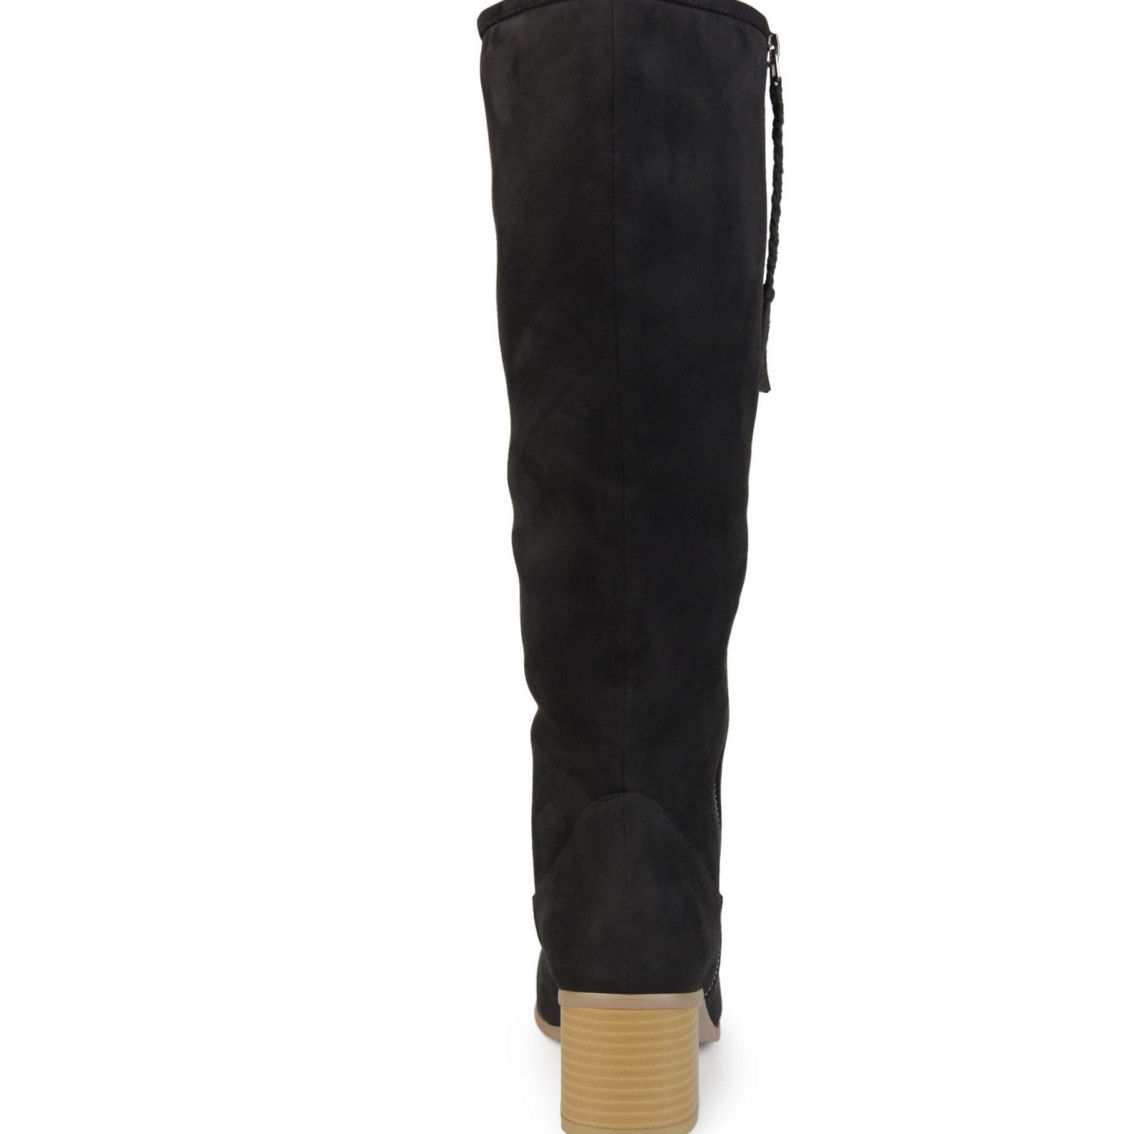 Journee Collection Women's Sanora Boot - Image 3 of 5